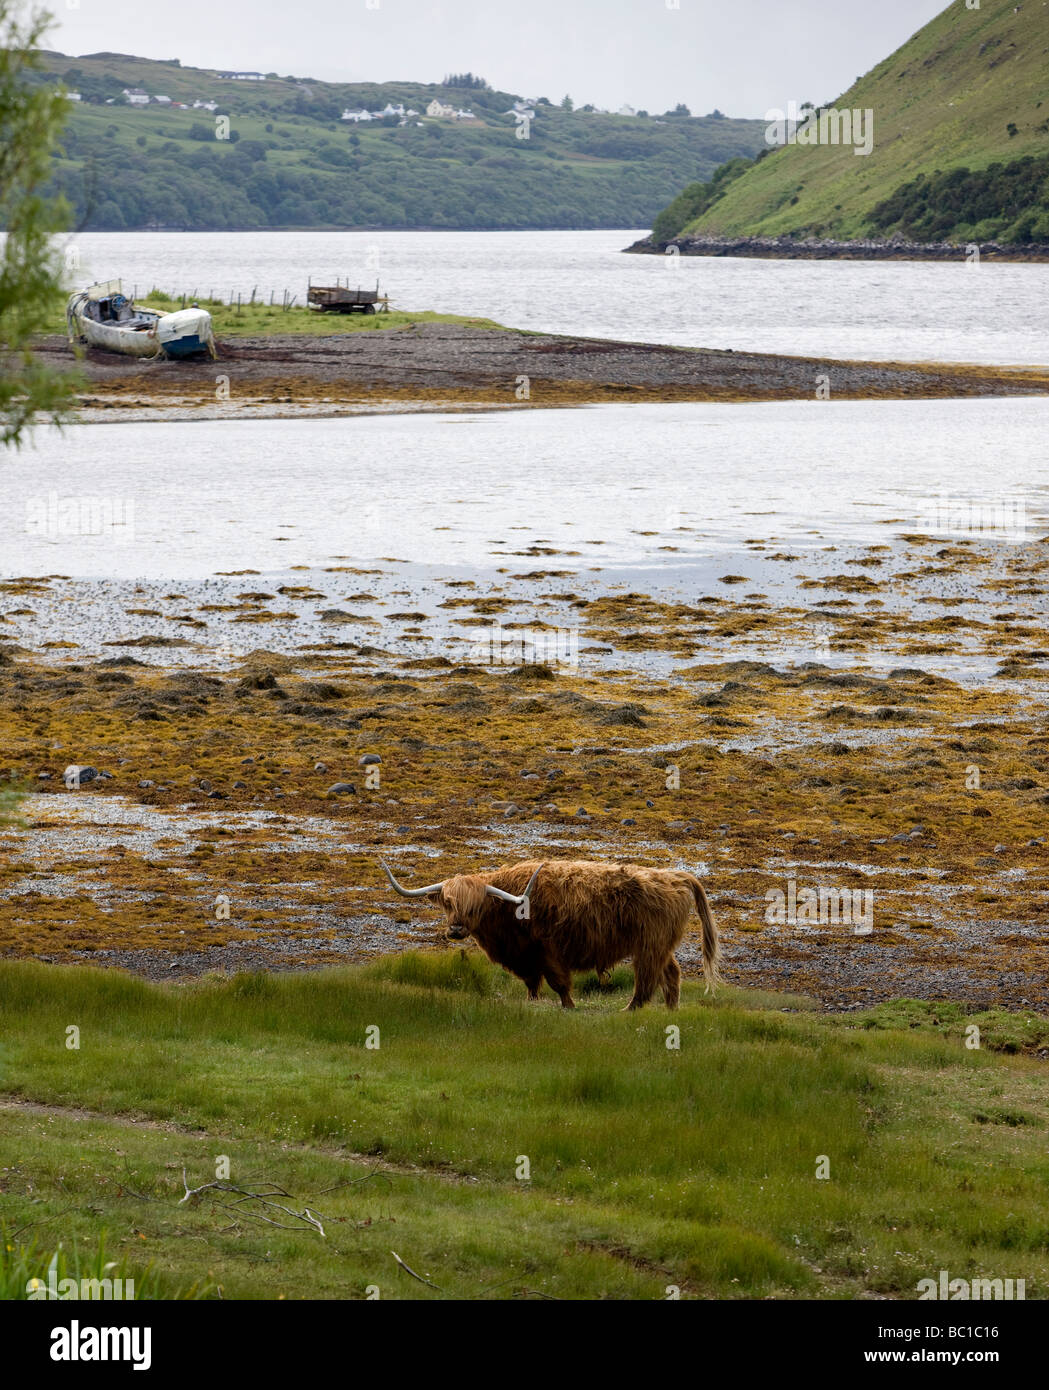 Alimentation des bovins des Highlands, sur les rives du Loch Harport Ile de Skye en Ecosse Banque D'Images